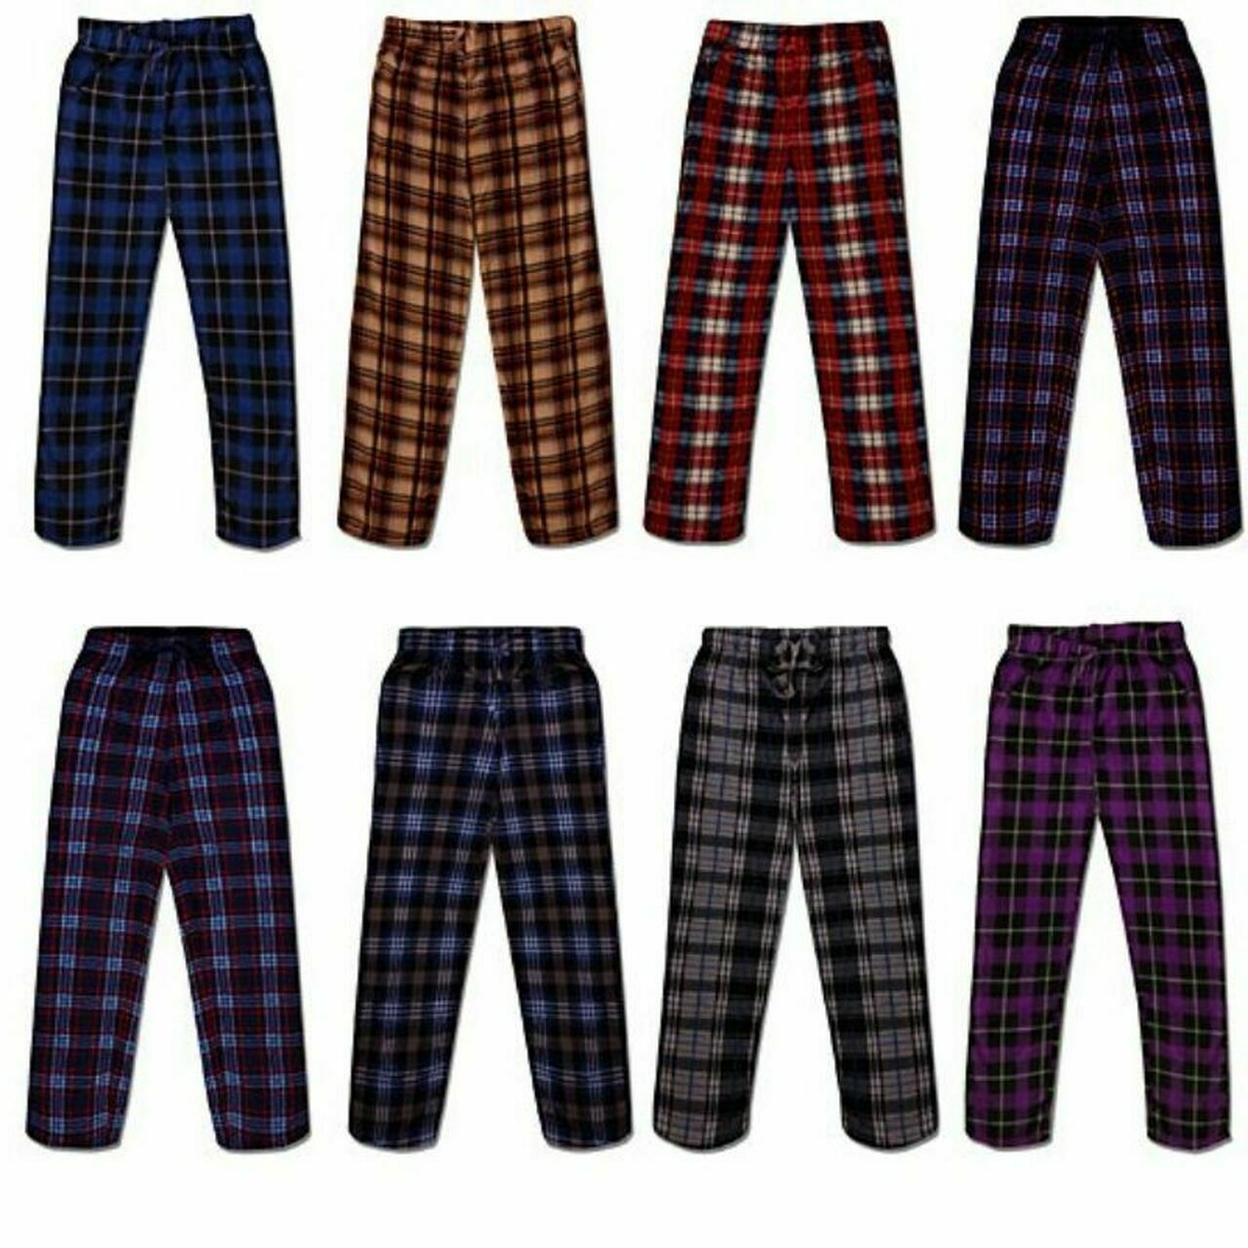 2-Pack: Men's Ultra Soft Cozy Flannel Fleece Plaid Pajama Sleep Bottom Lounge Pants - Red & Blue, Large